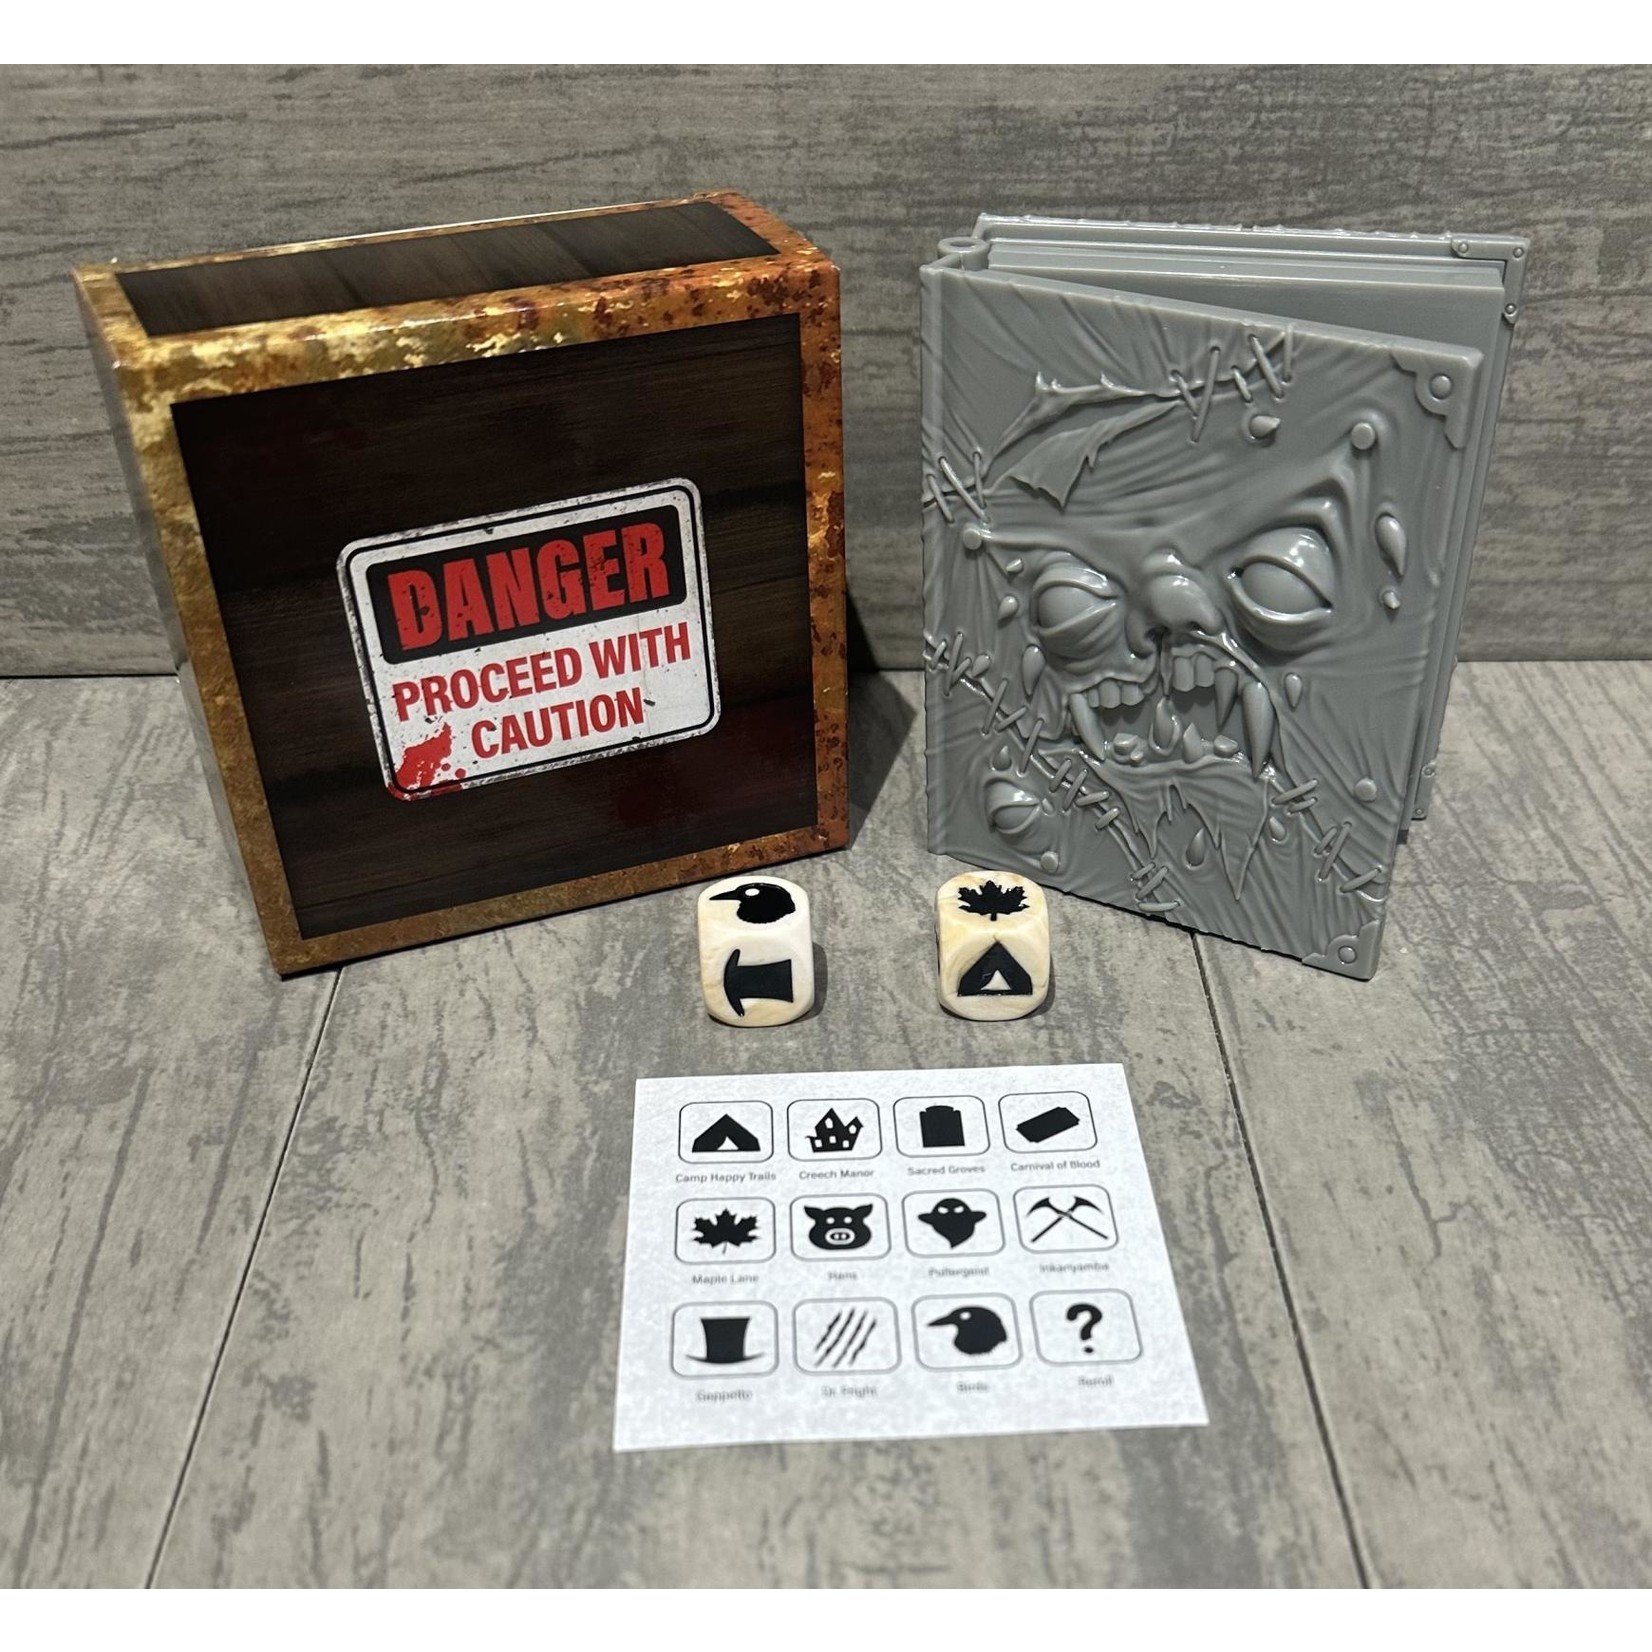 Gift Card — Van Ryder Games